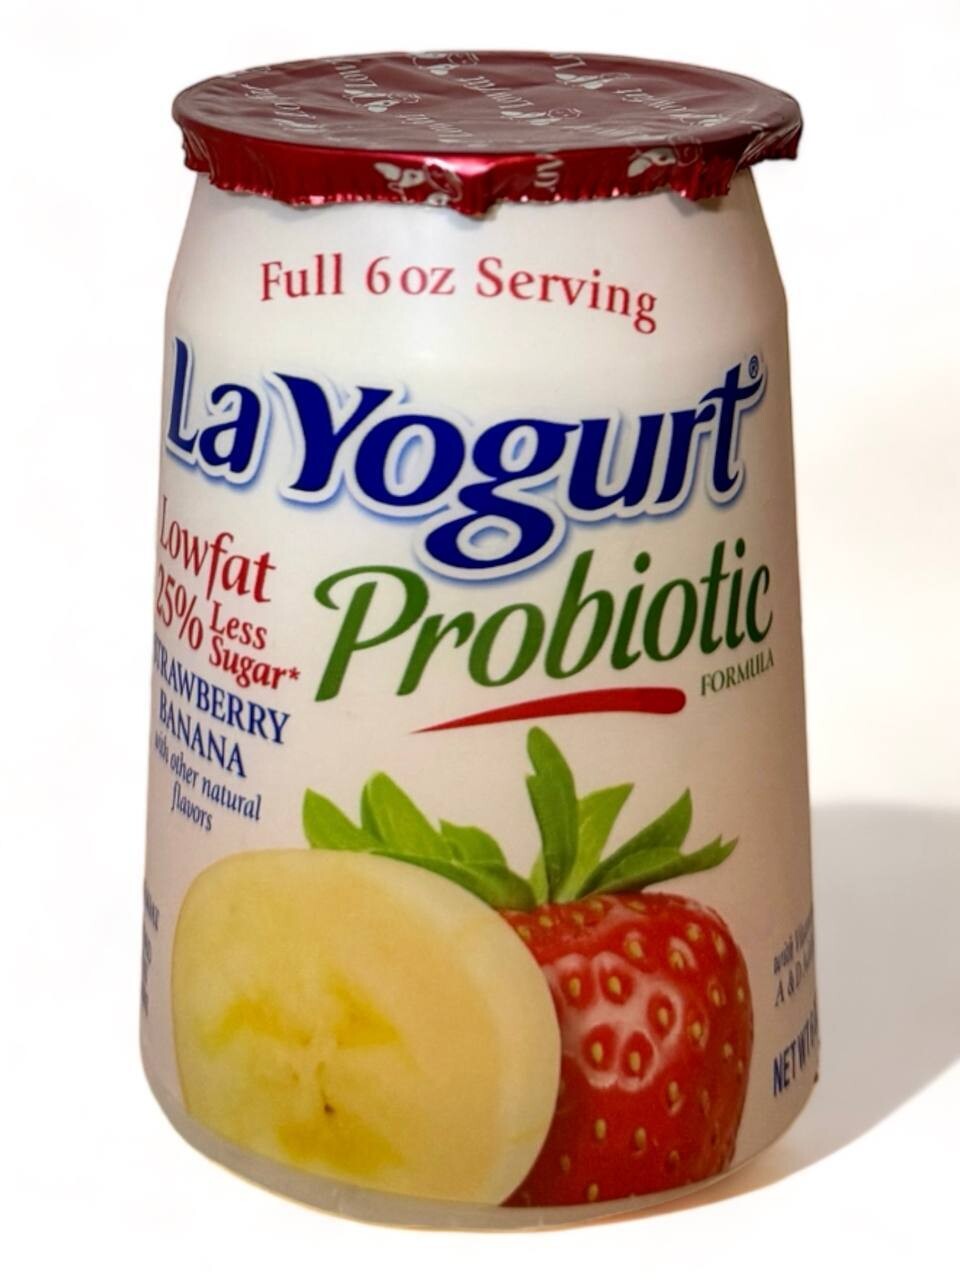 La Yogurt Lowfat Probiotic With Strawberry Banana 6oz (170g.)